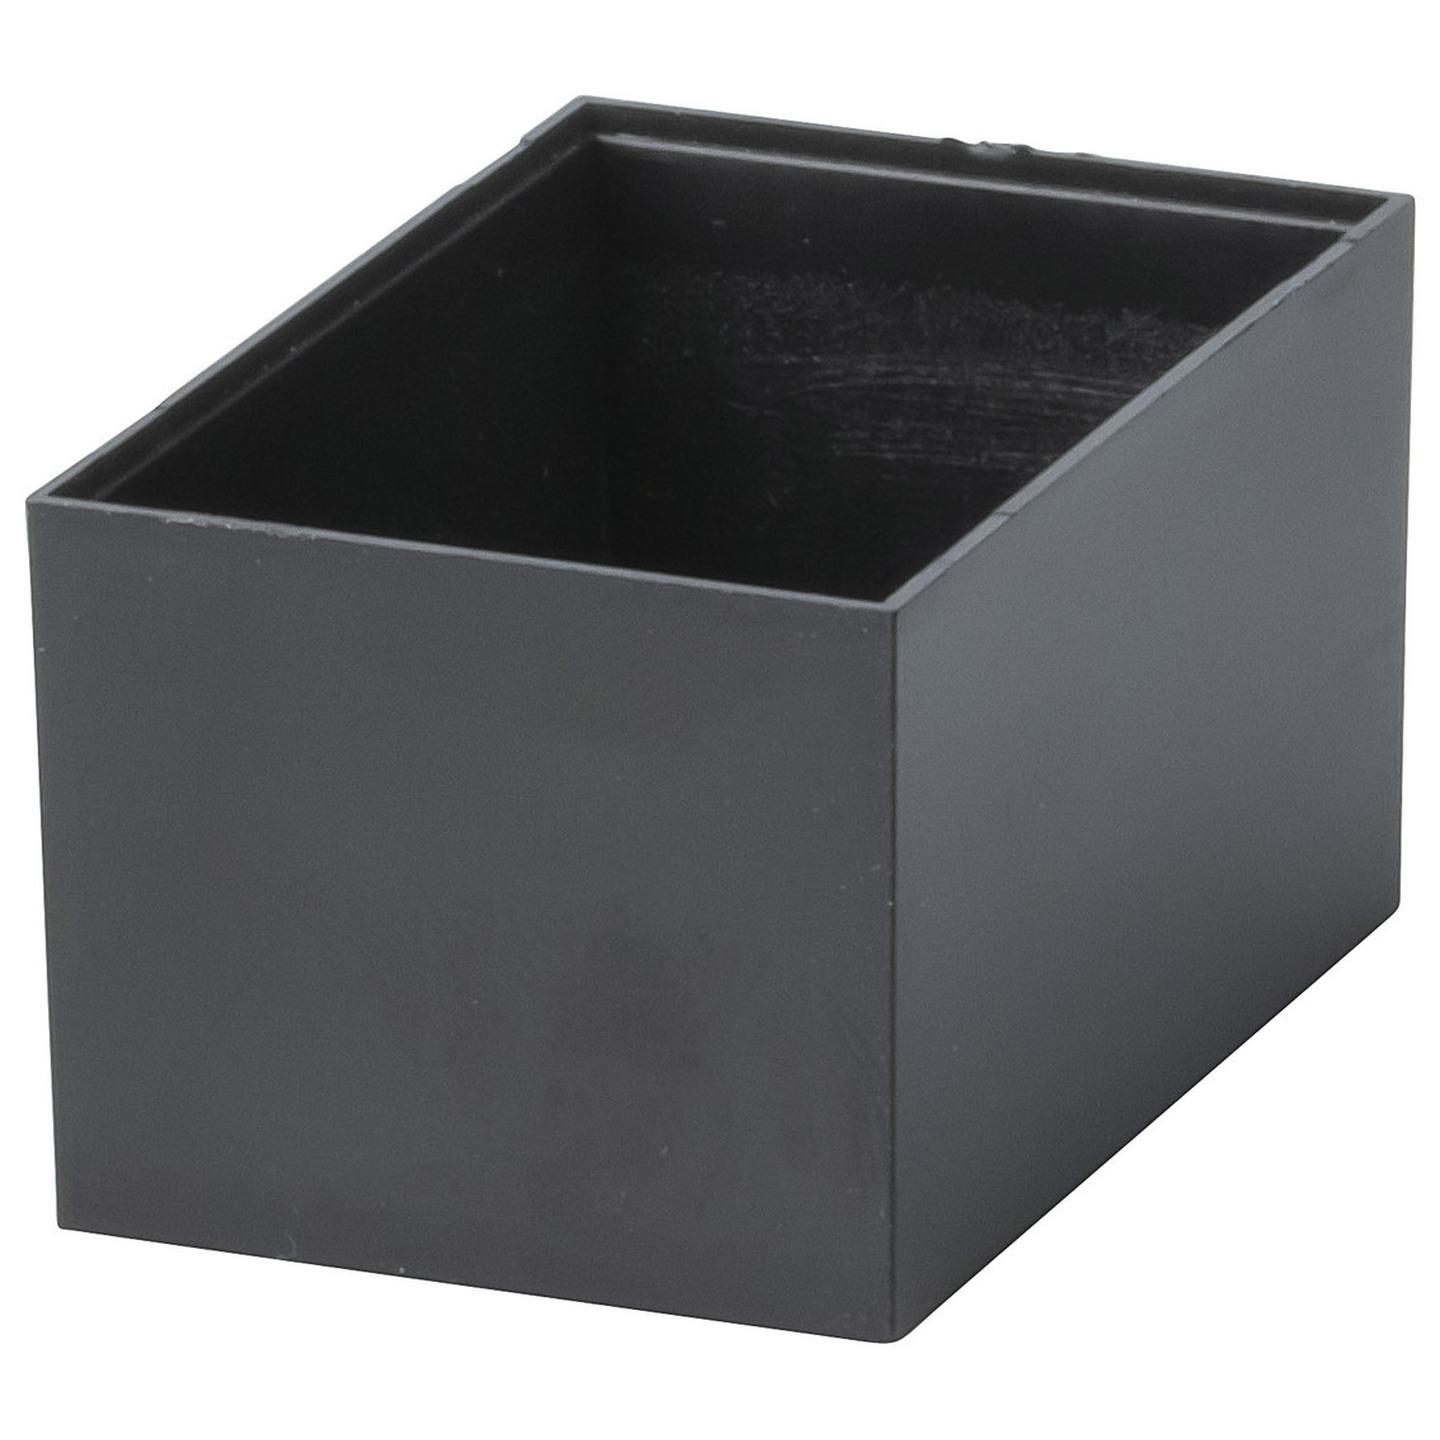 Enclosure Potting Box 45x30x25mm Black